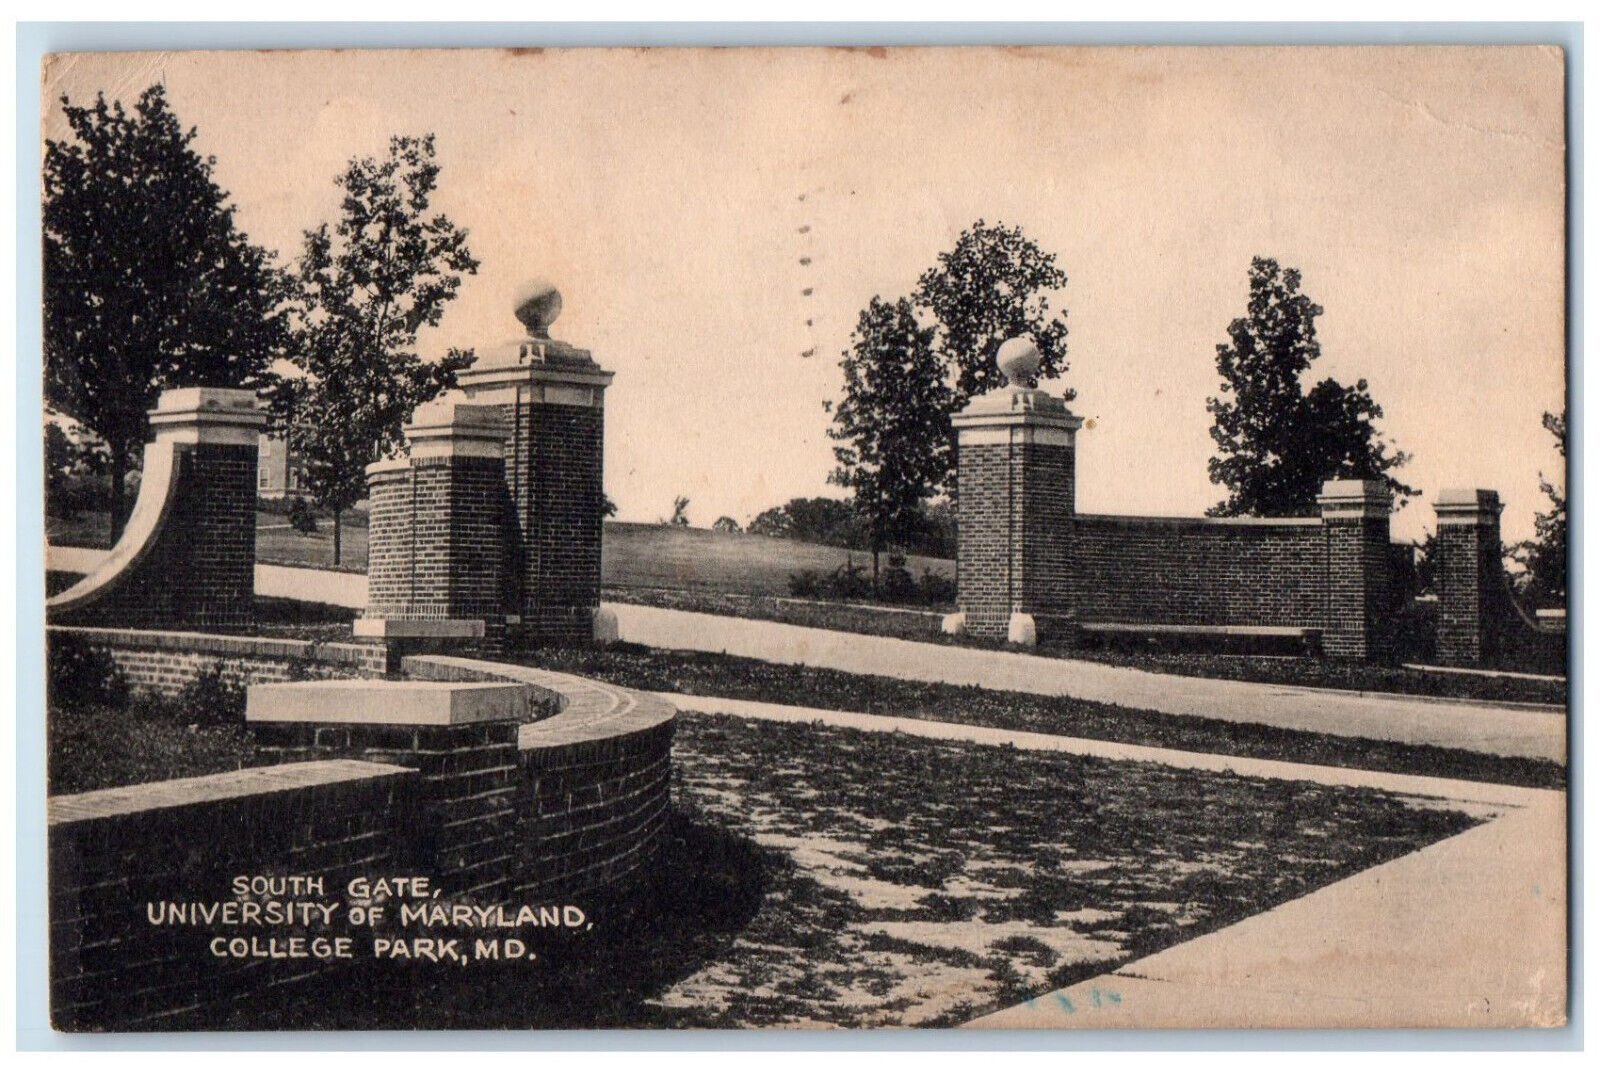 1947 South Gate University of Maryland College Park MD Vintage Postcard